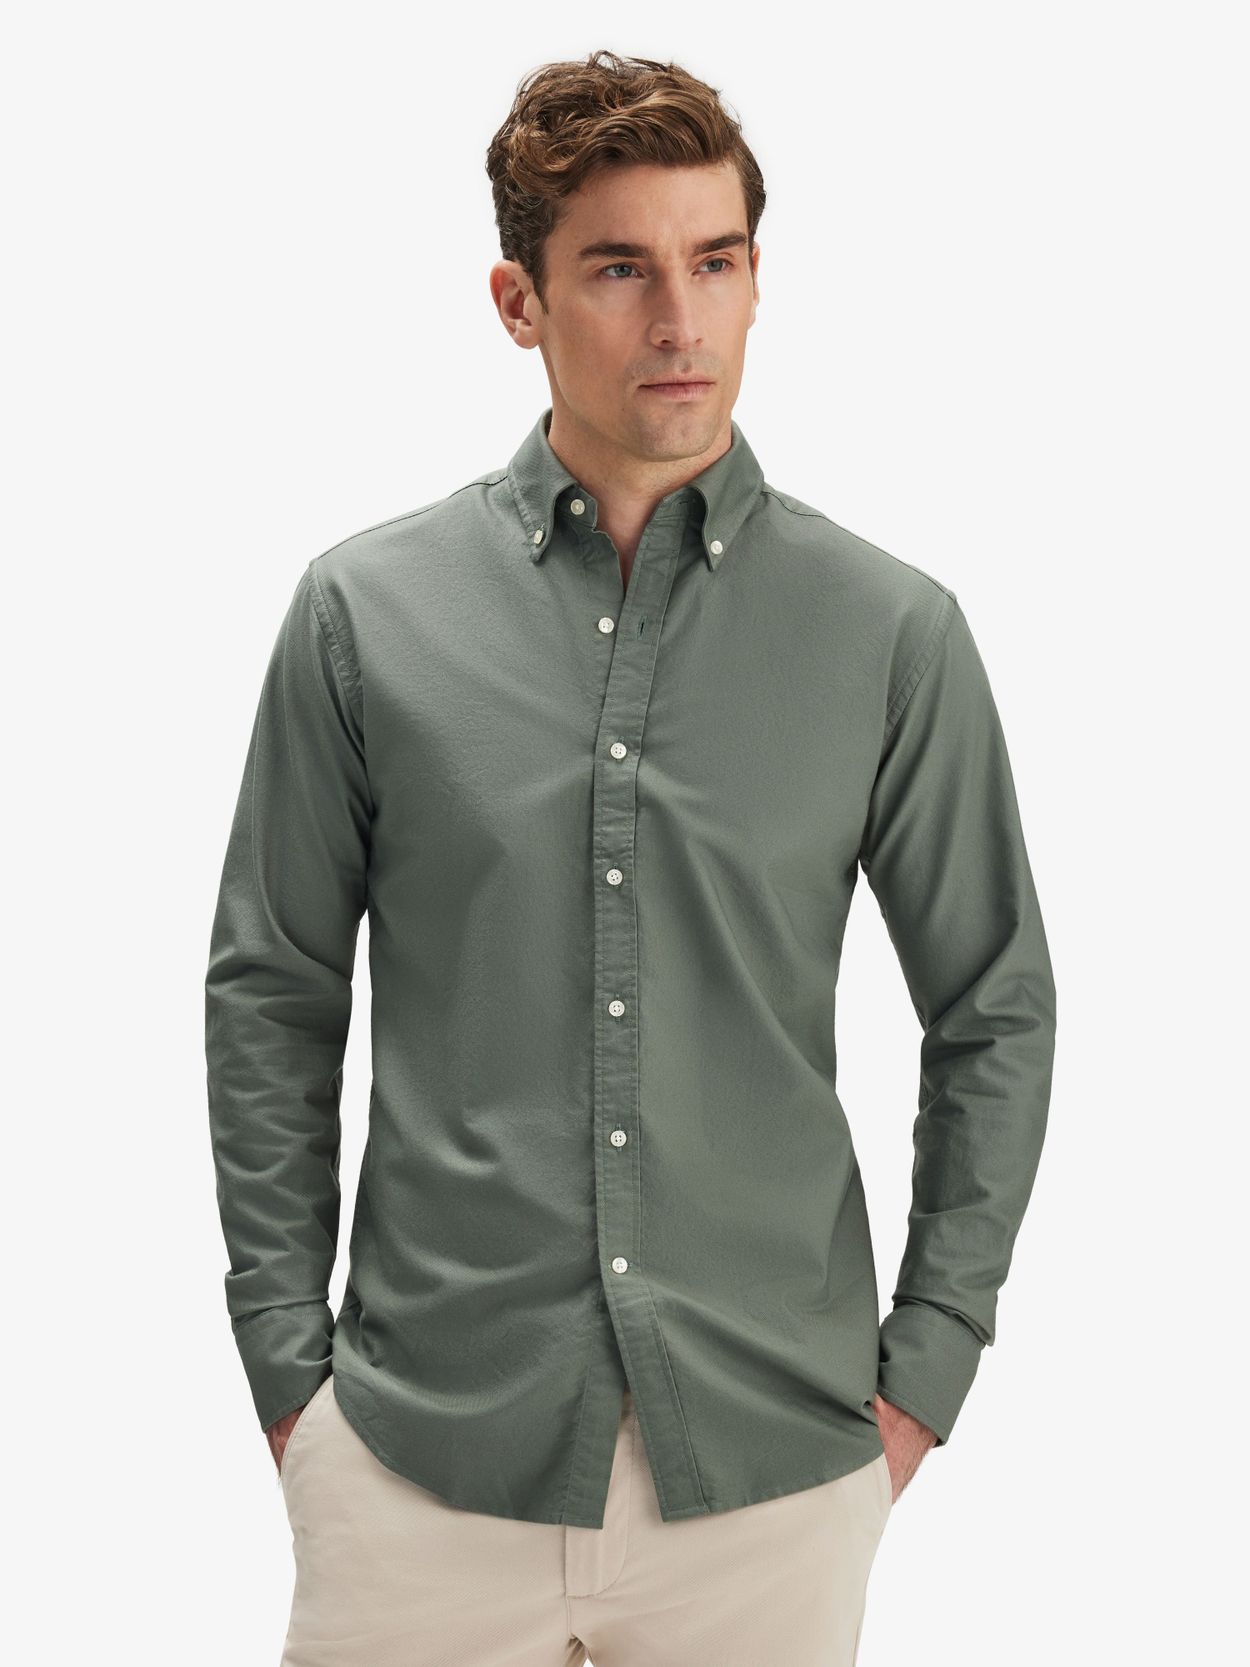 Olive Green Oxford Shirt